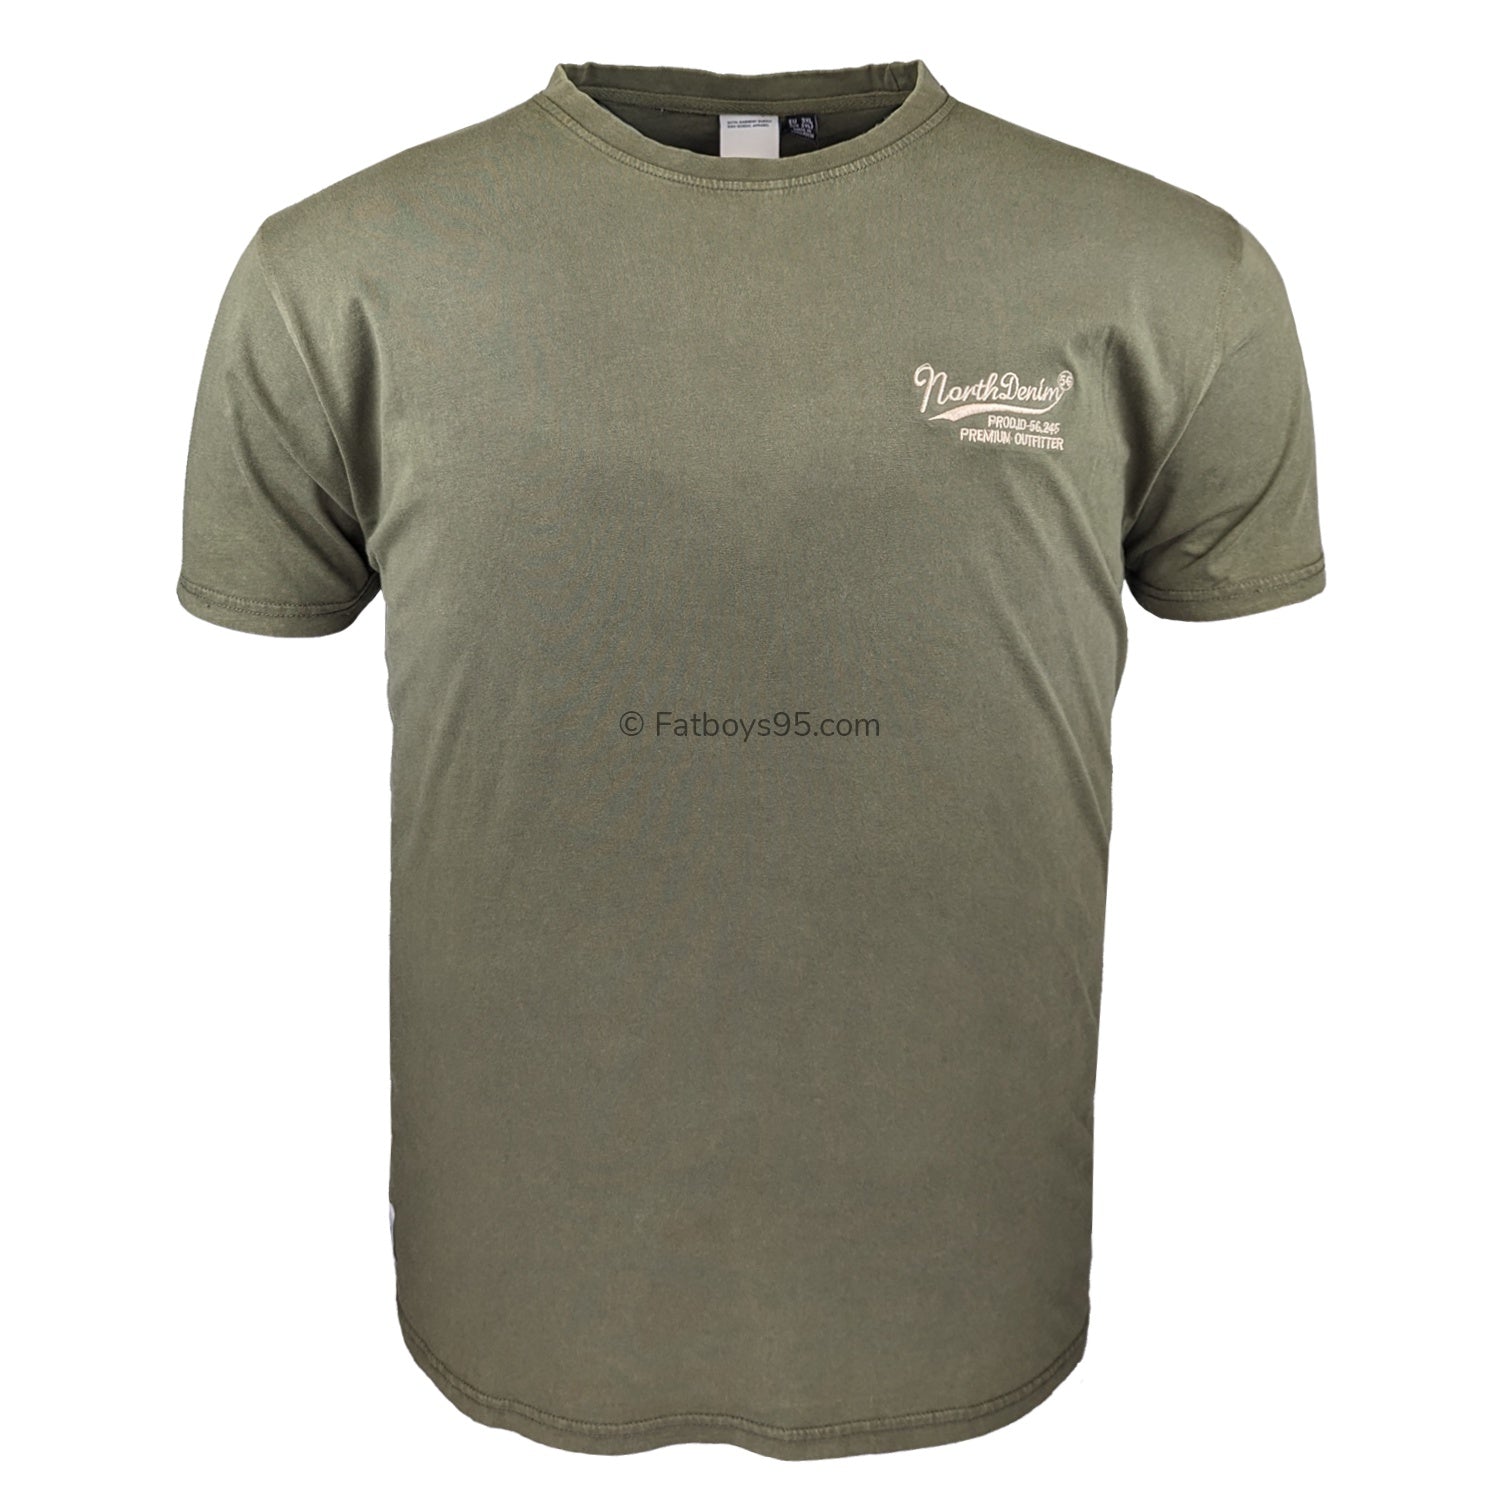 North 56Denim T-Shirt - 41330 - Dusty Olive Green 1